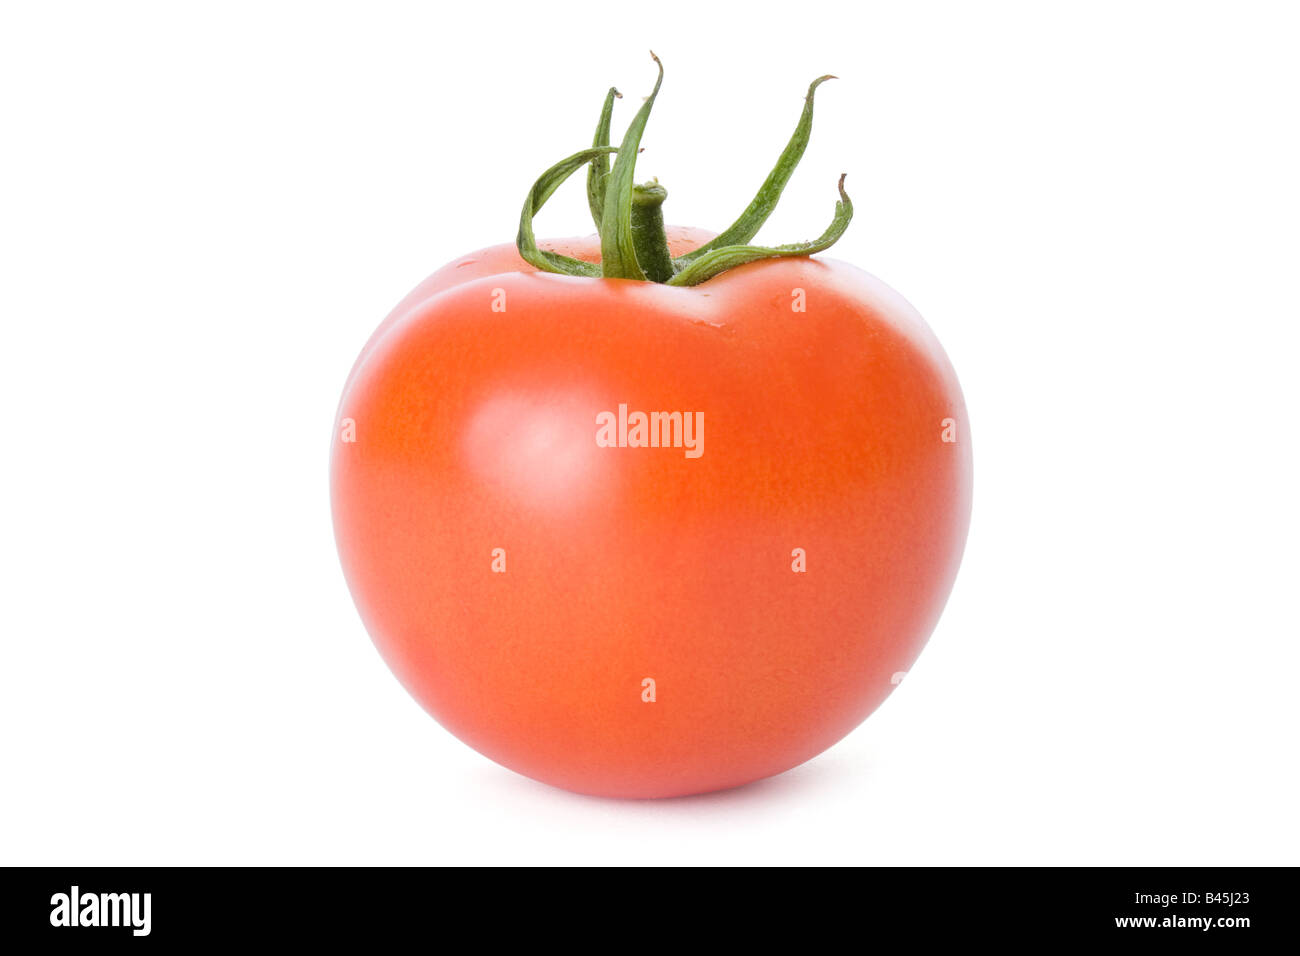 Ripe tomato isolated on a white background Stock Photo